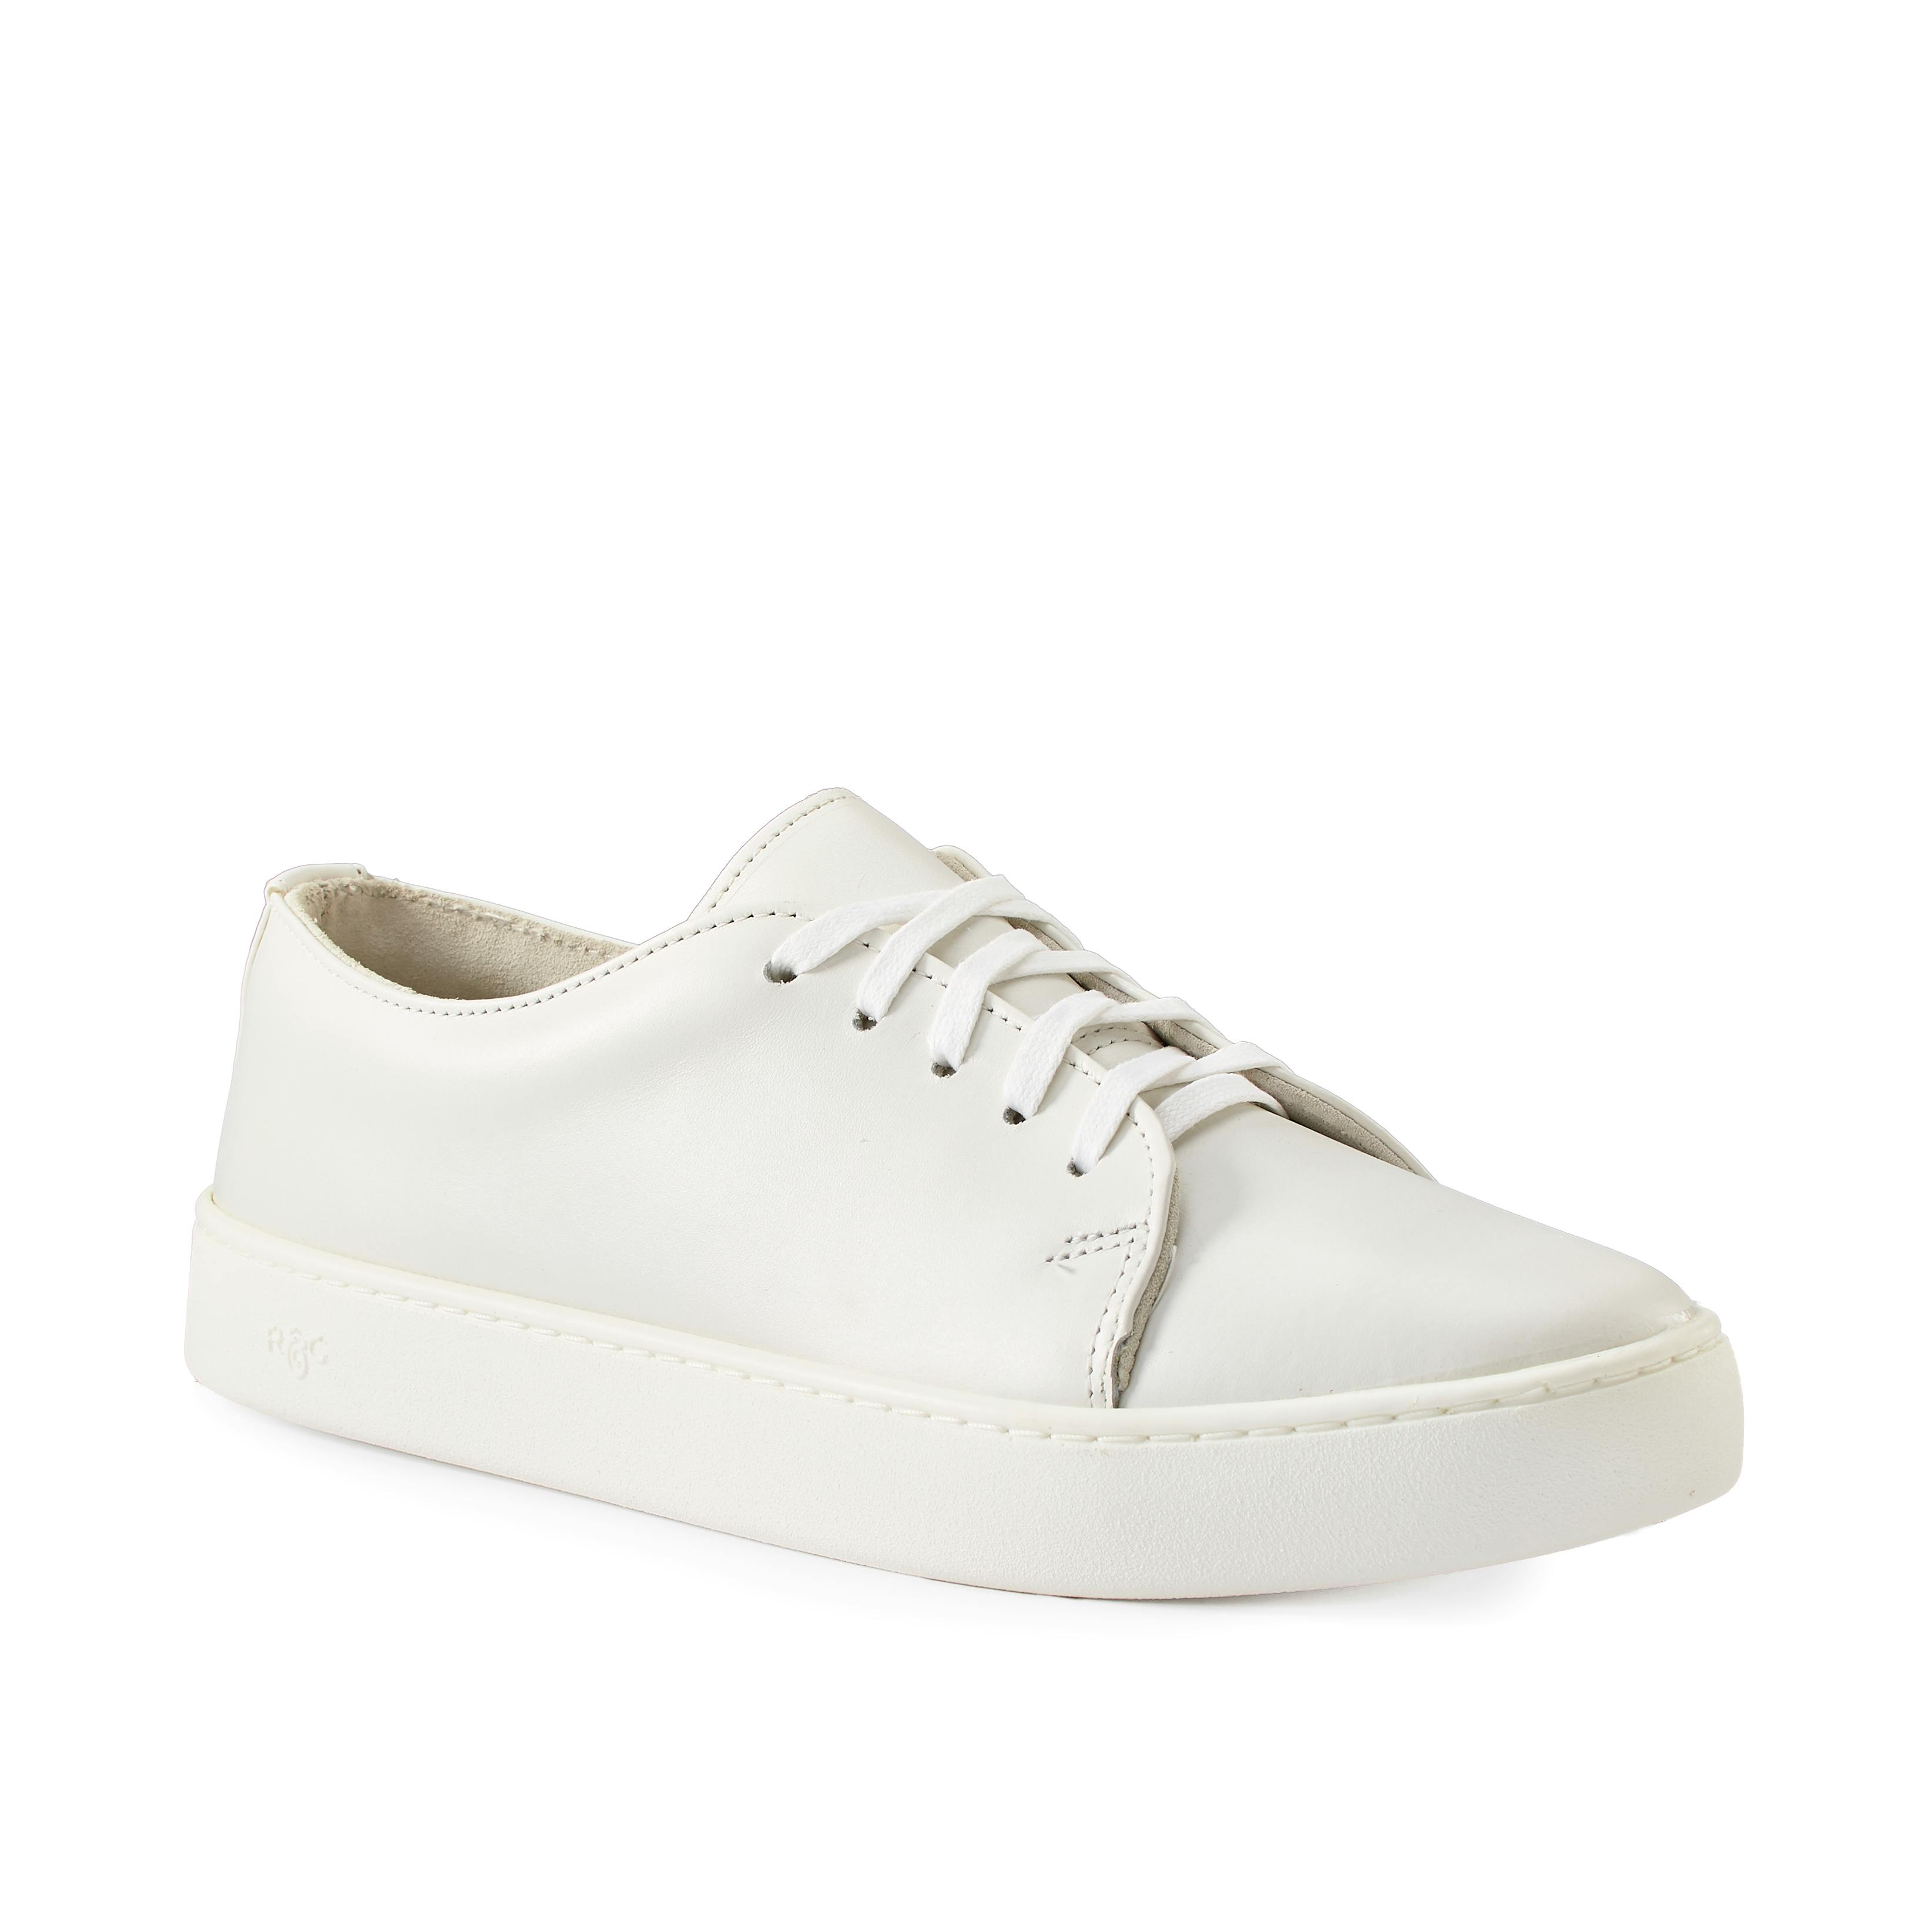 & Co. Court Classic 2.0 - White | Premium Sneakers Huckberry